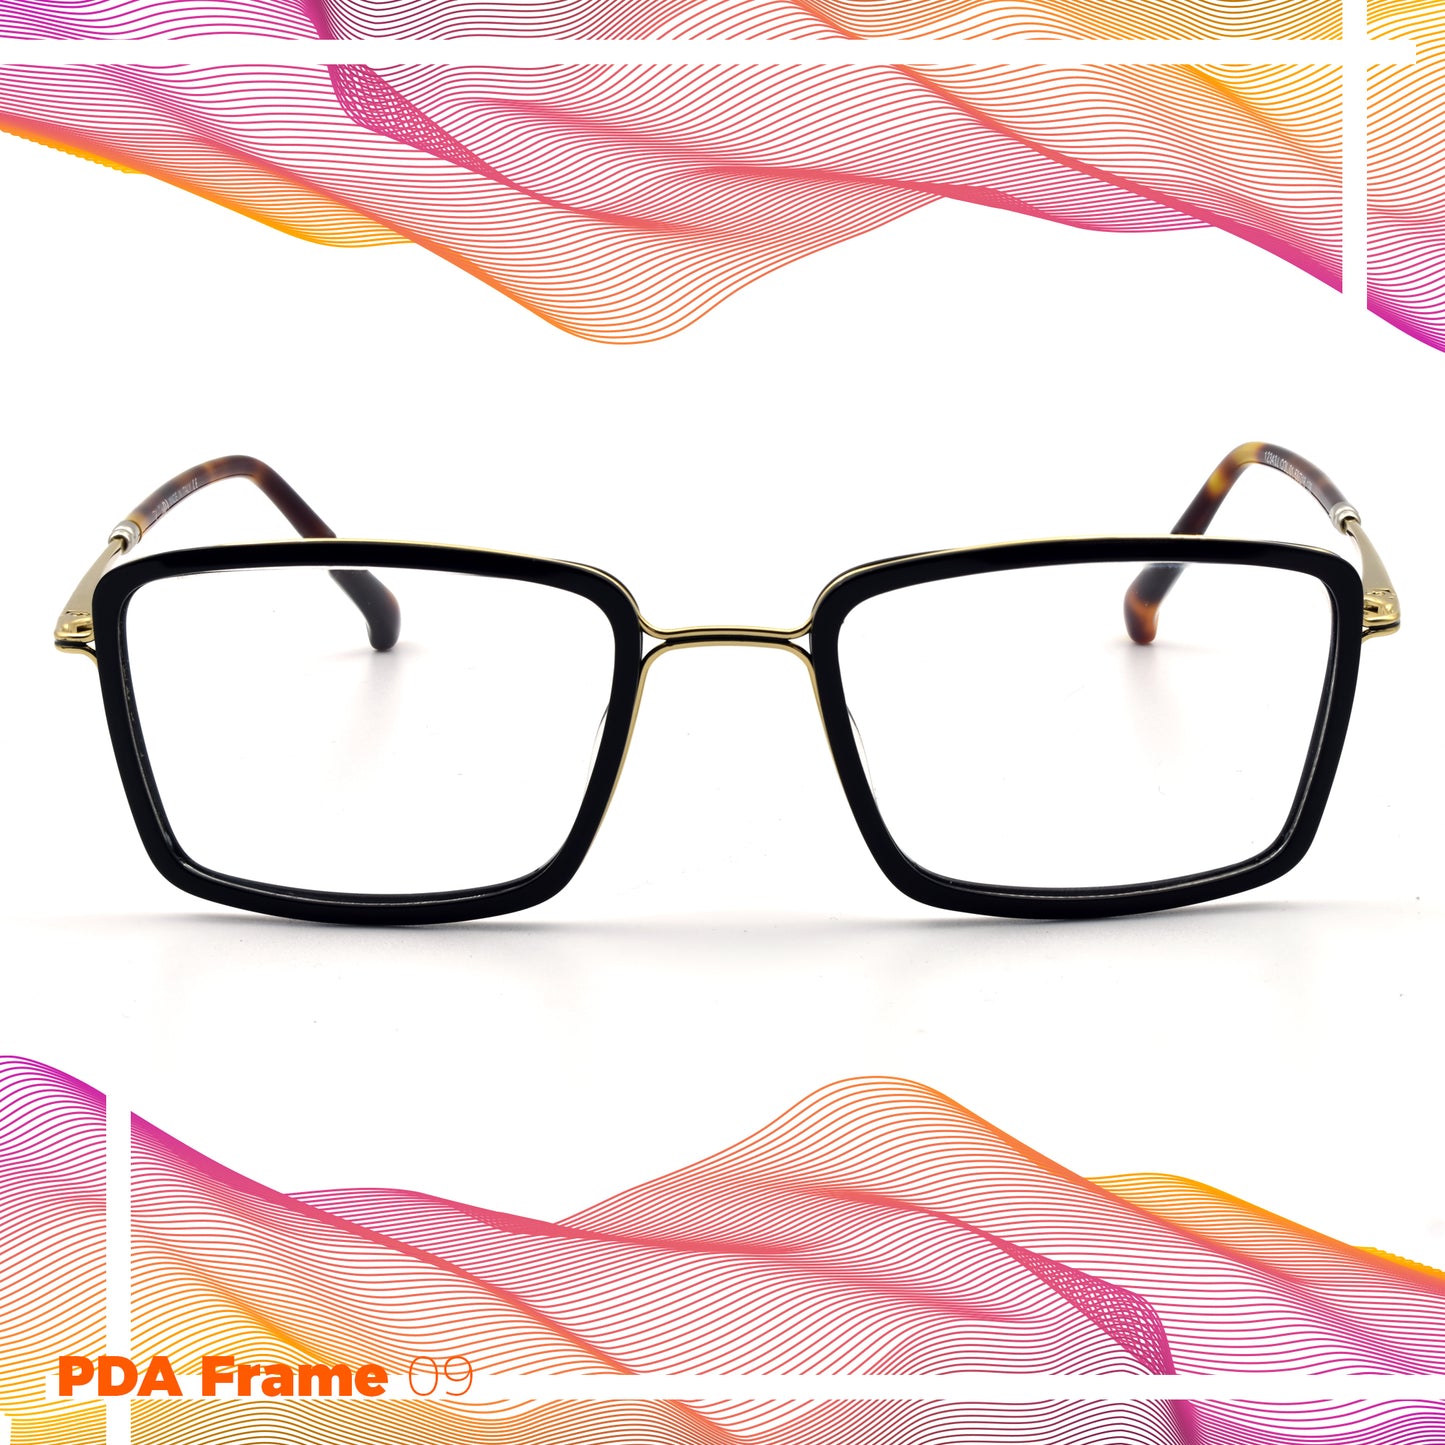 Trendy Stylish Optic Frame | PDA Frame 09 | Premium Quality